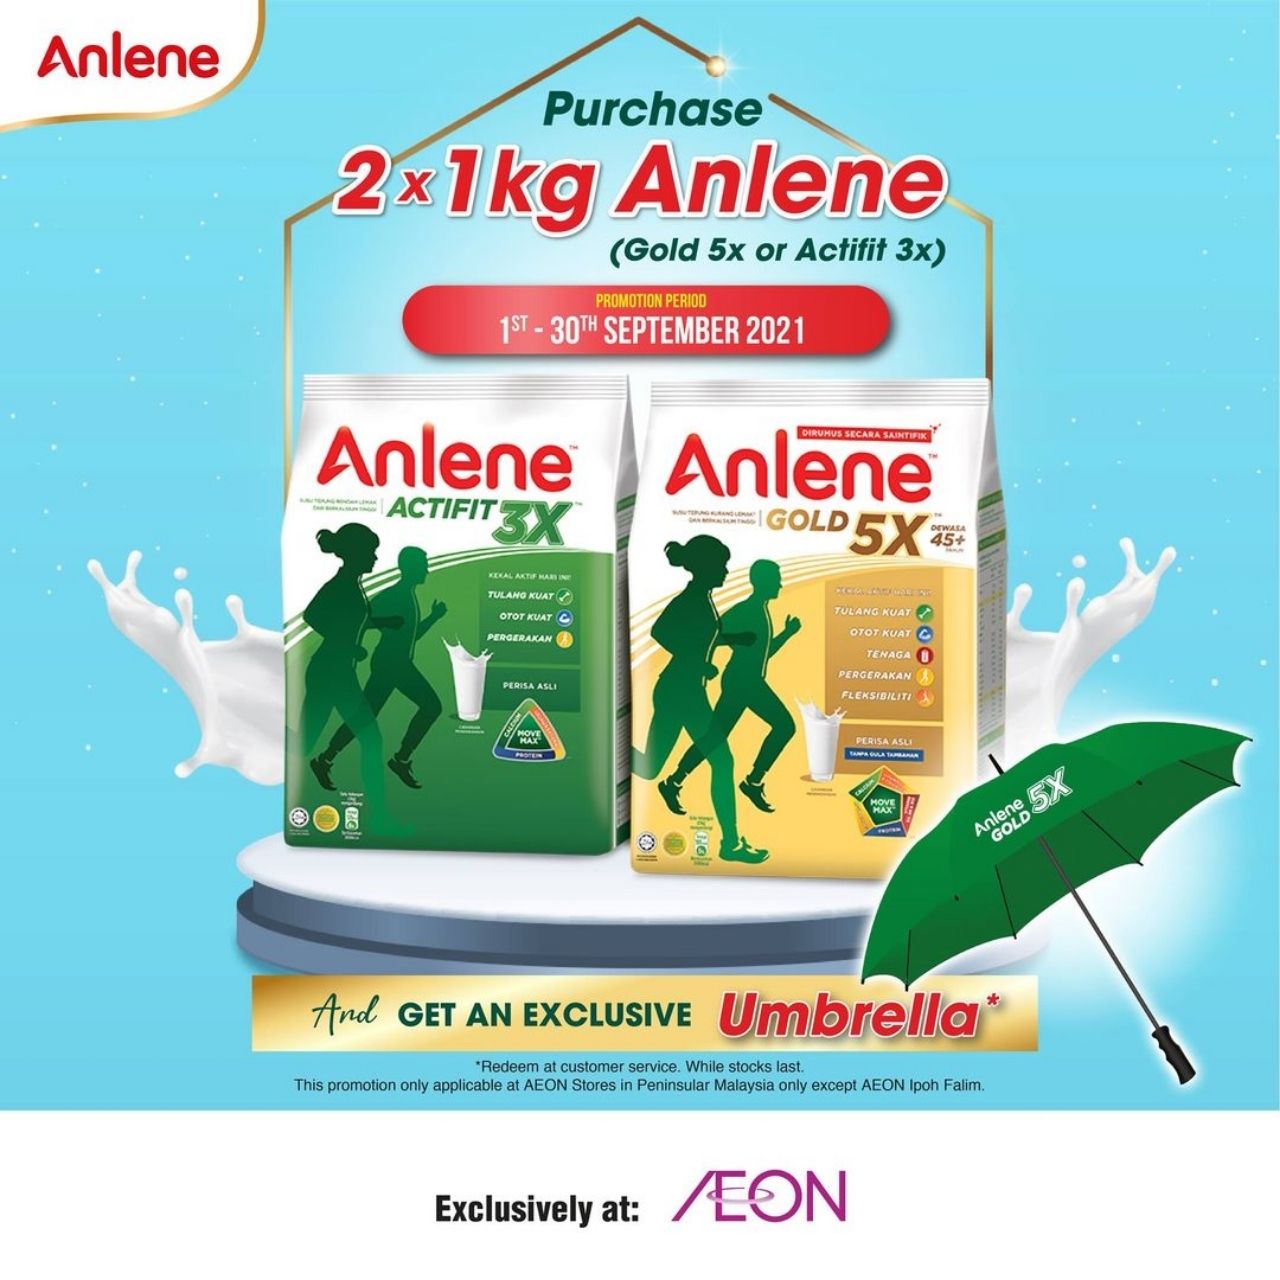 Free Umbrella from Anlene at AEON